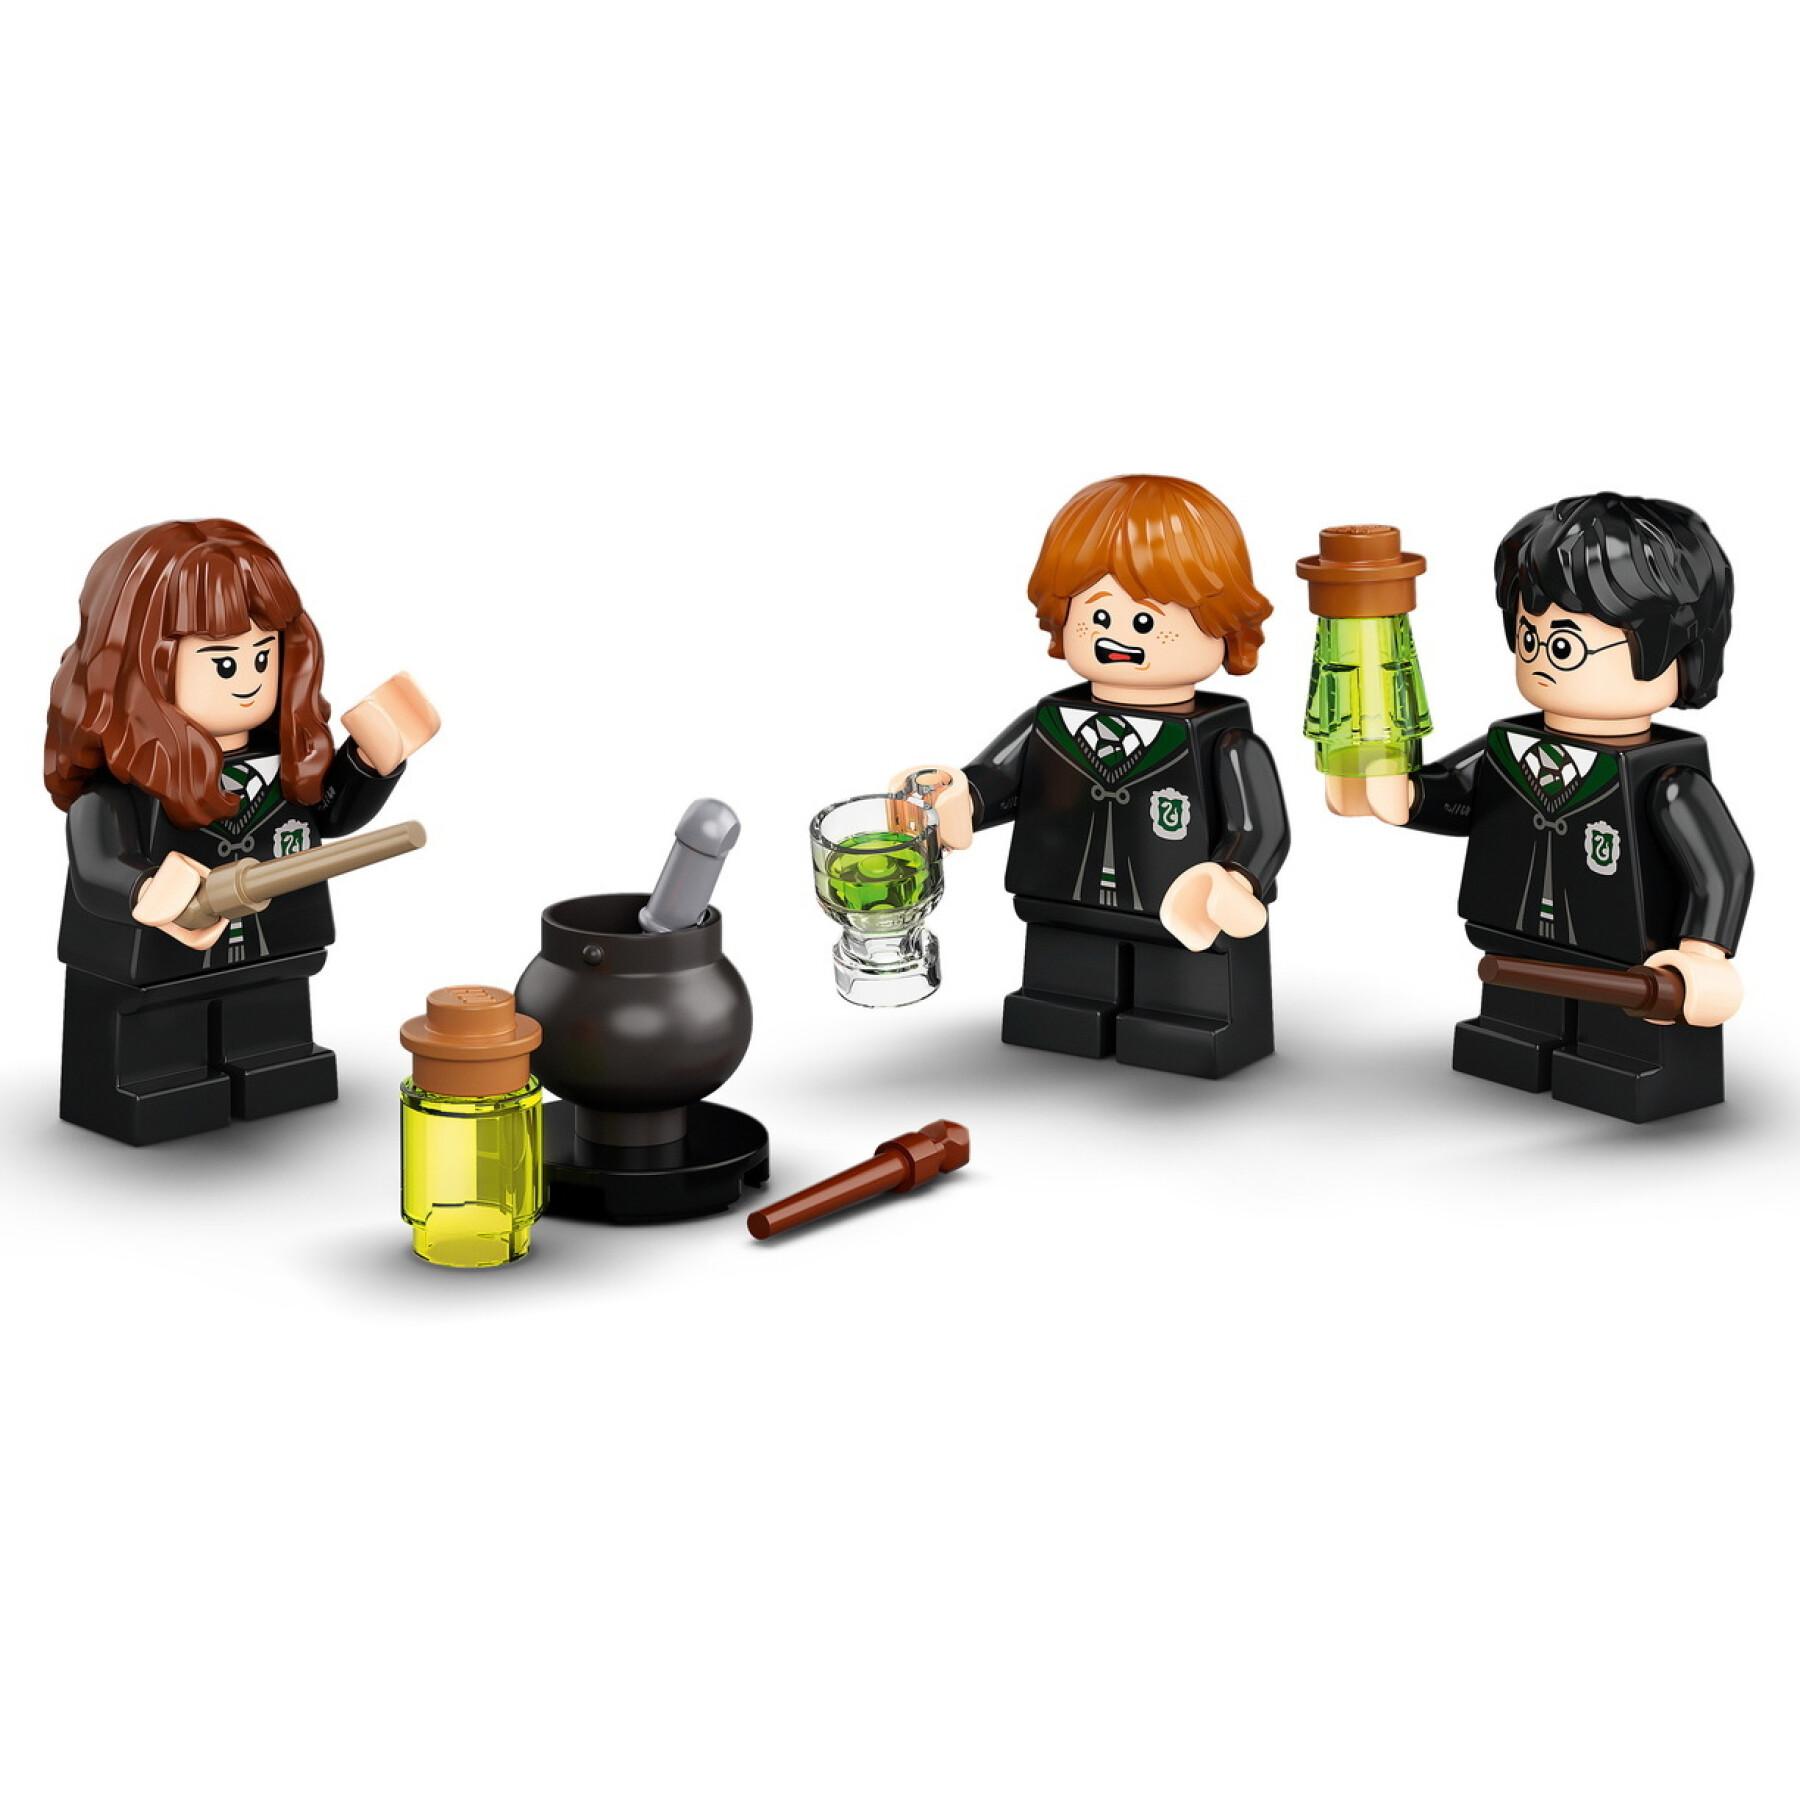 The polynectar potion mistake harry potter Lego